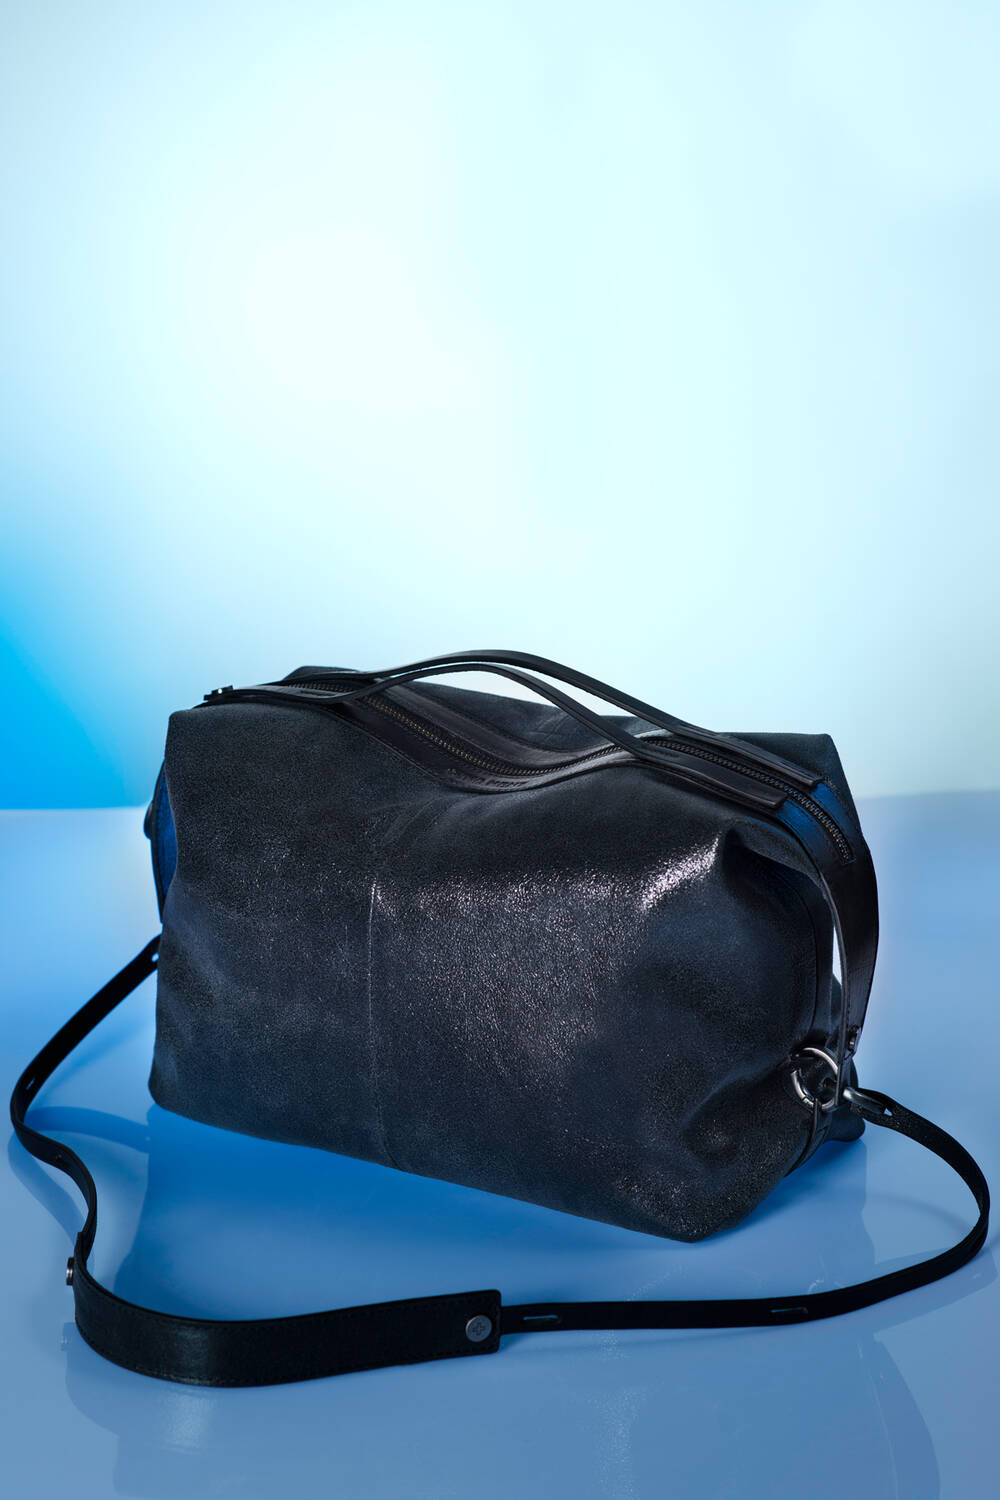 INA KENT-Handtasche DELA YIN ed.1 in crackled onyx – glänzend-schwarzes Leder